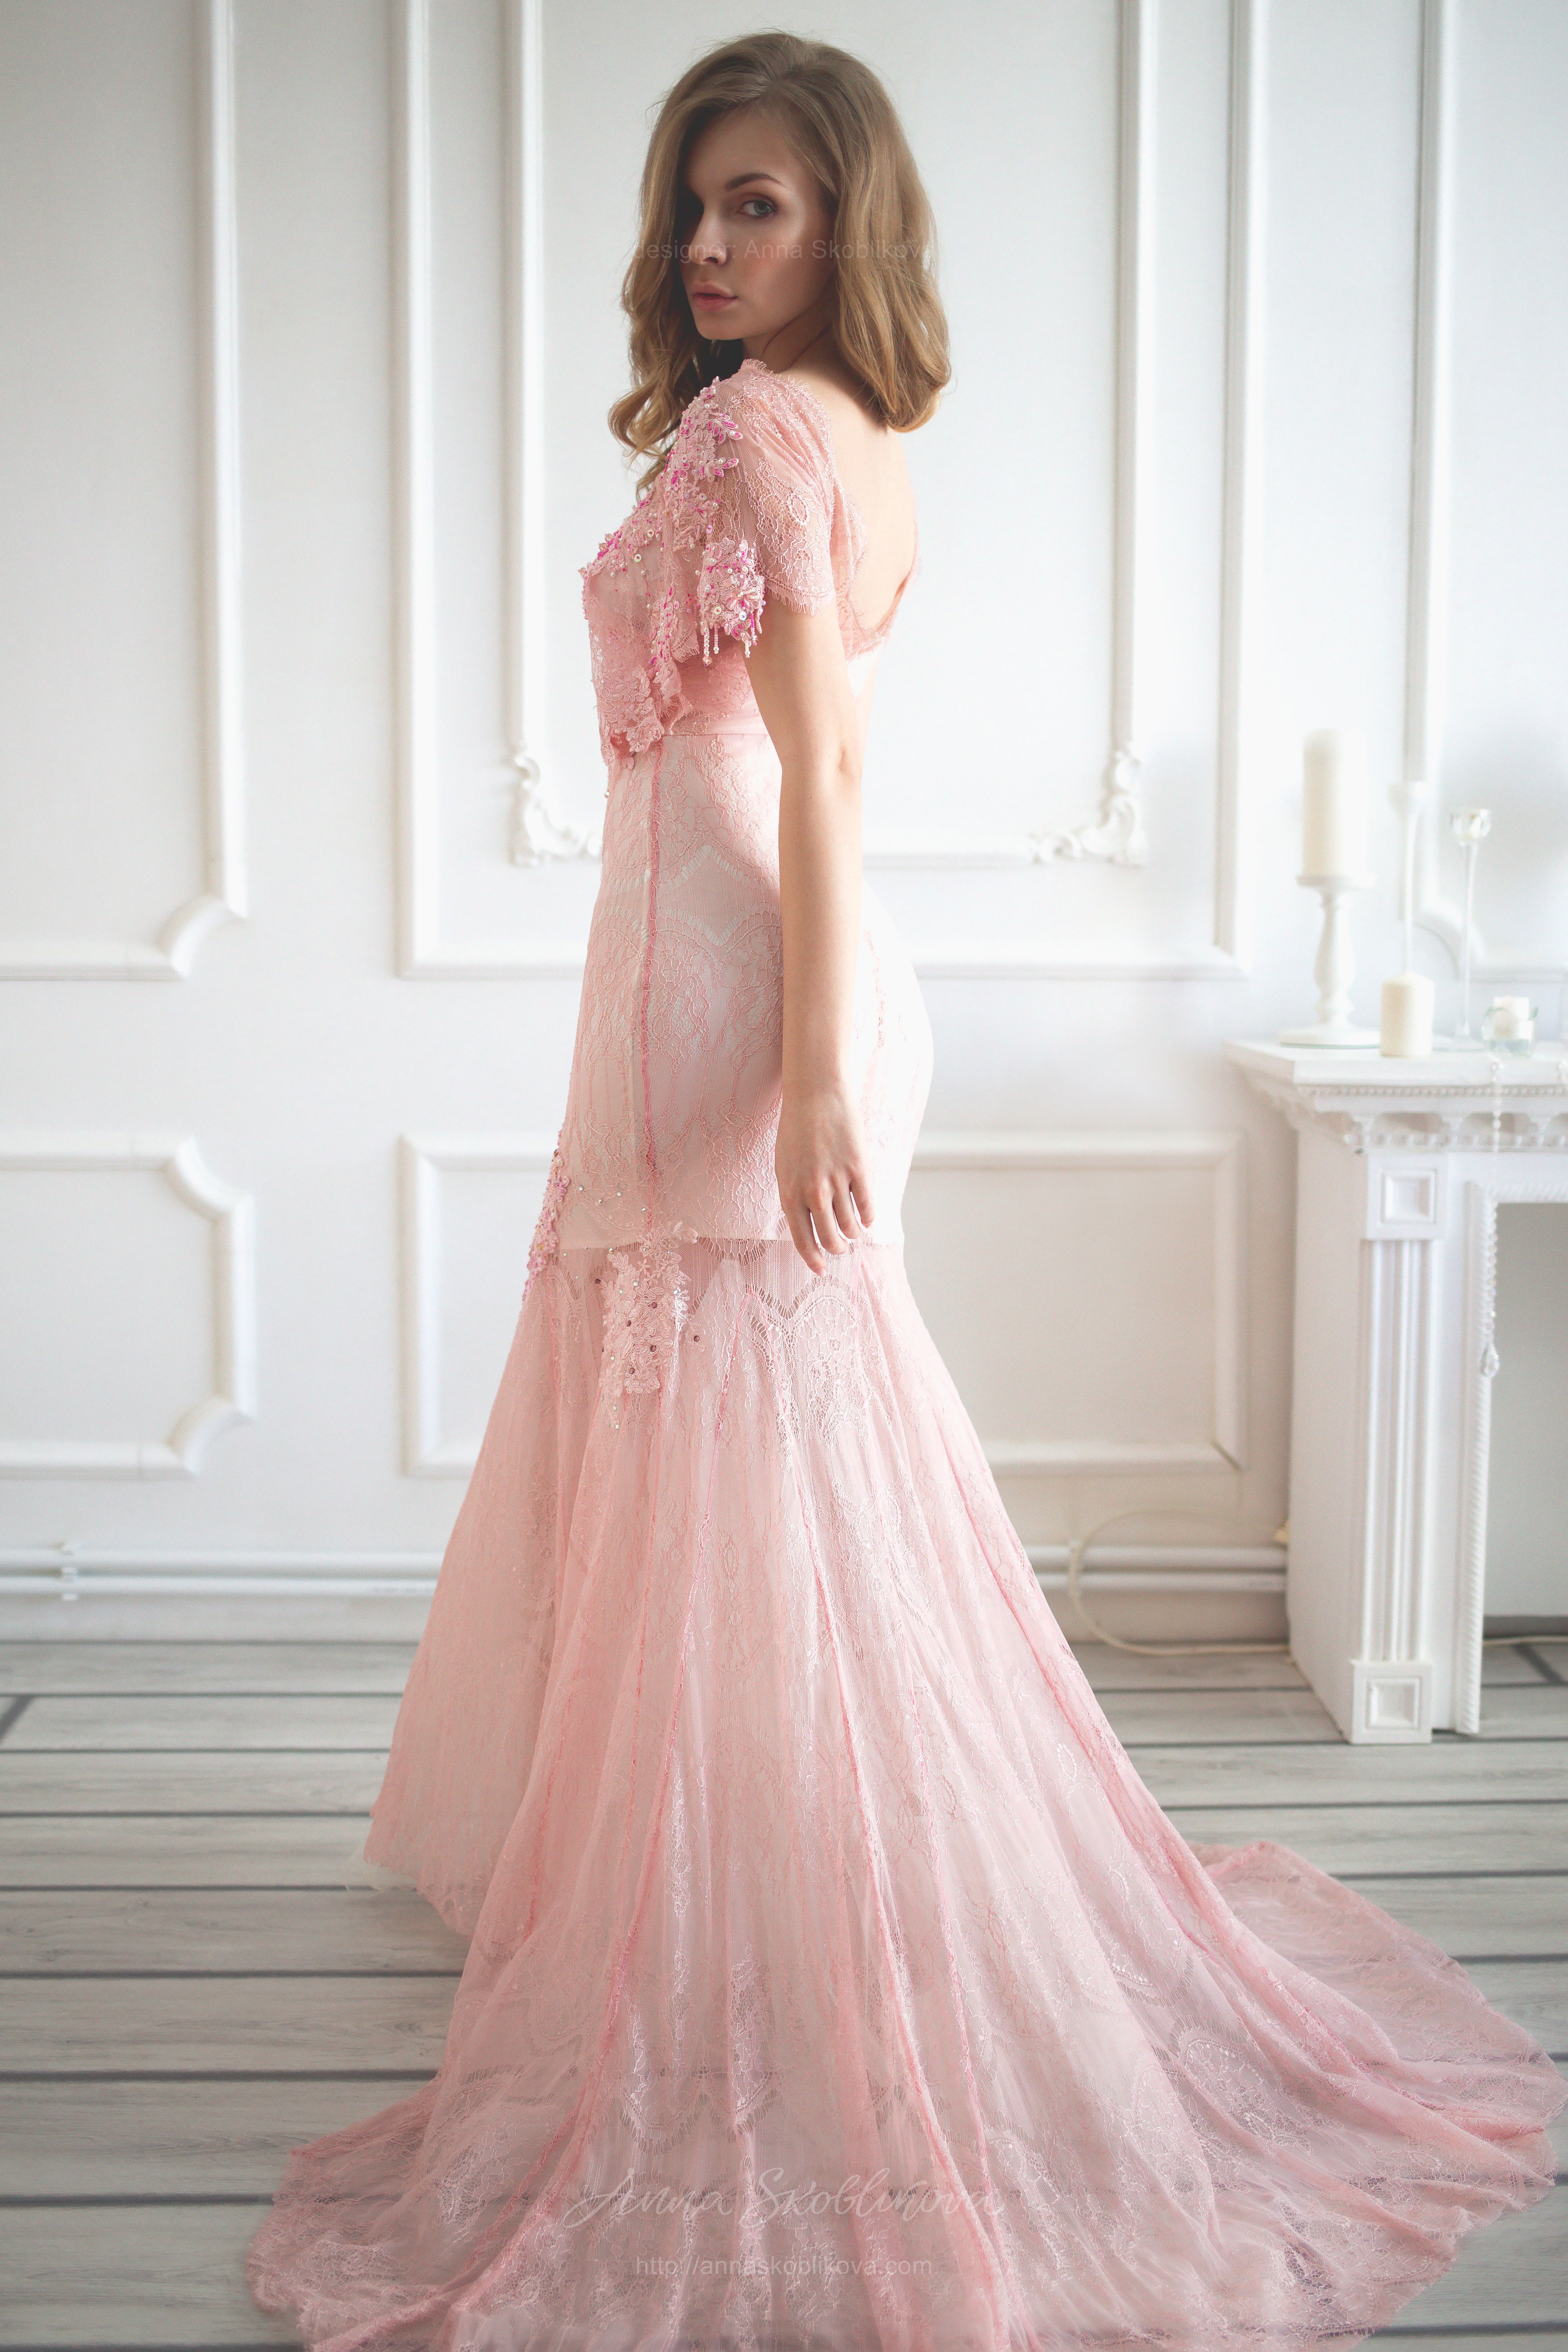 Airy Light Pink Wedding Dress | Anna Skoblikova